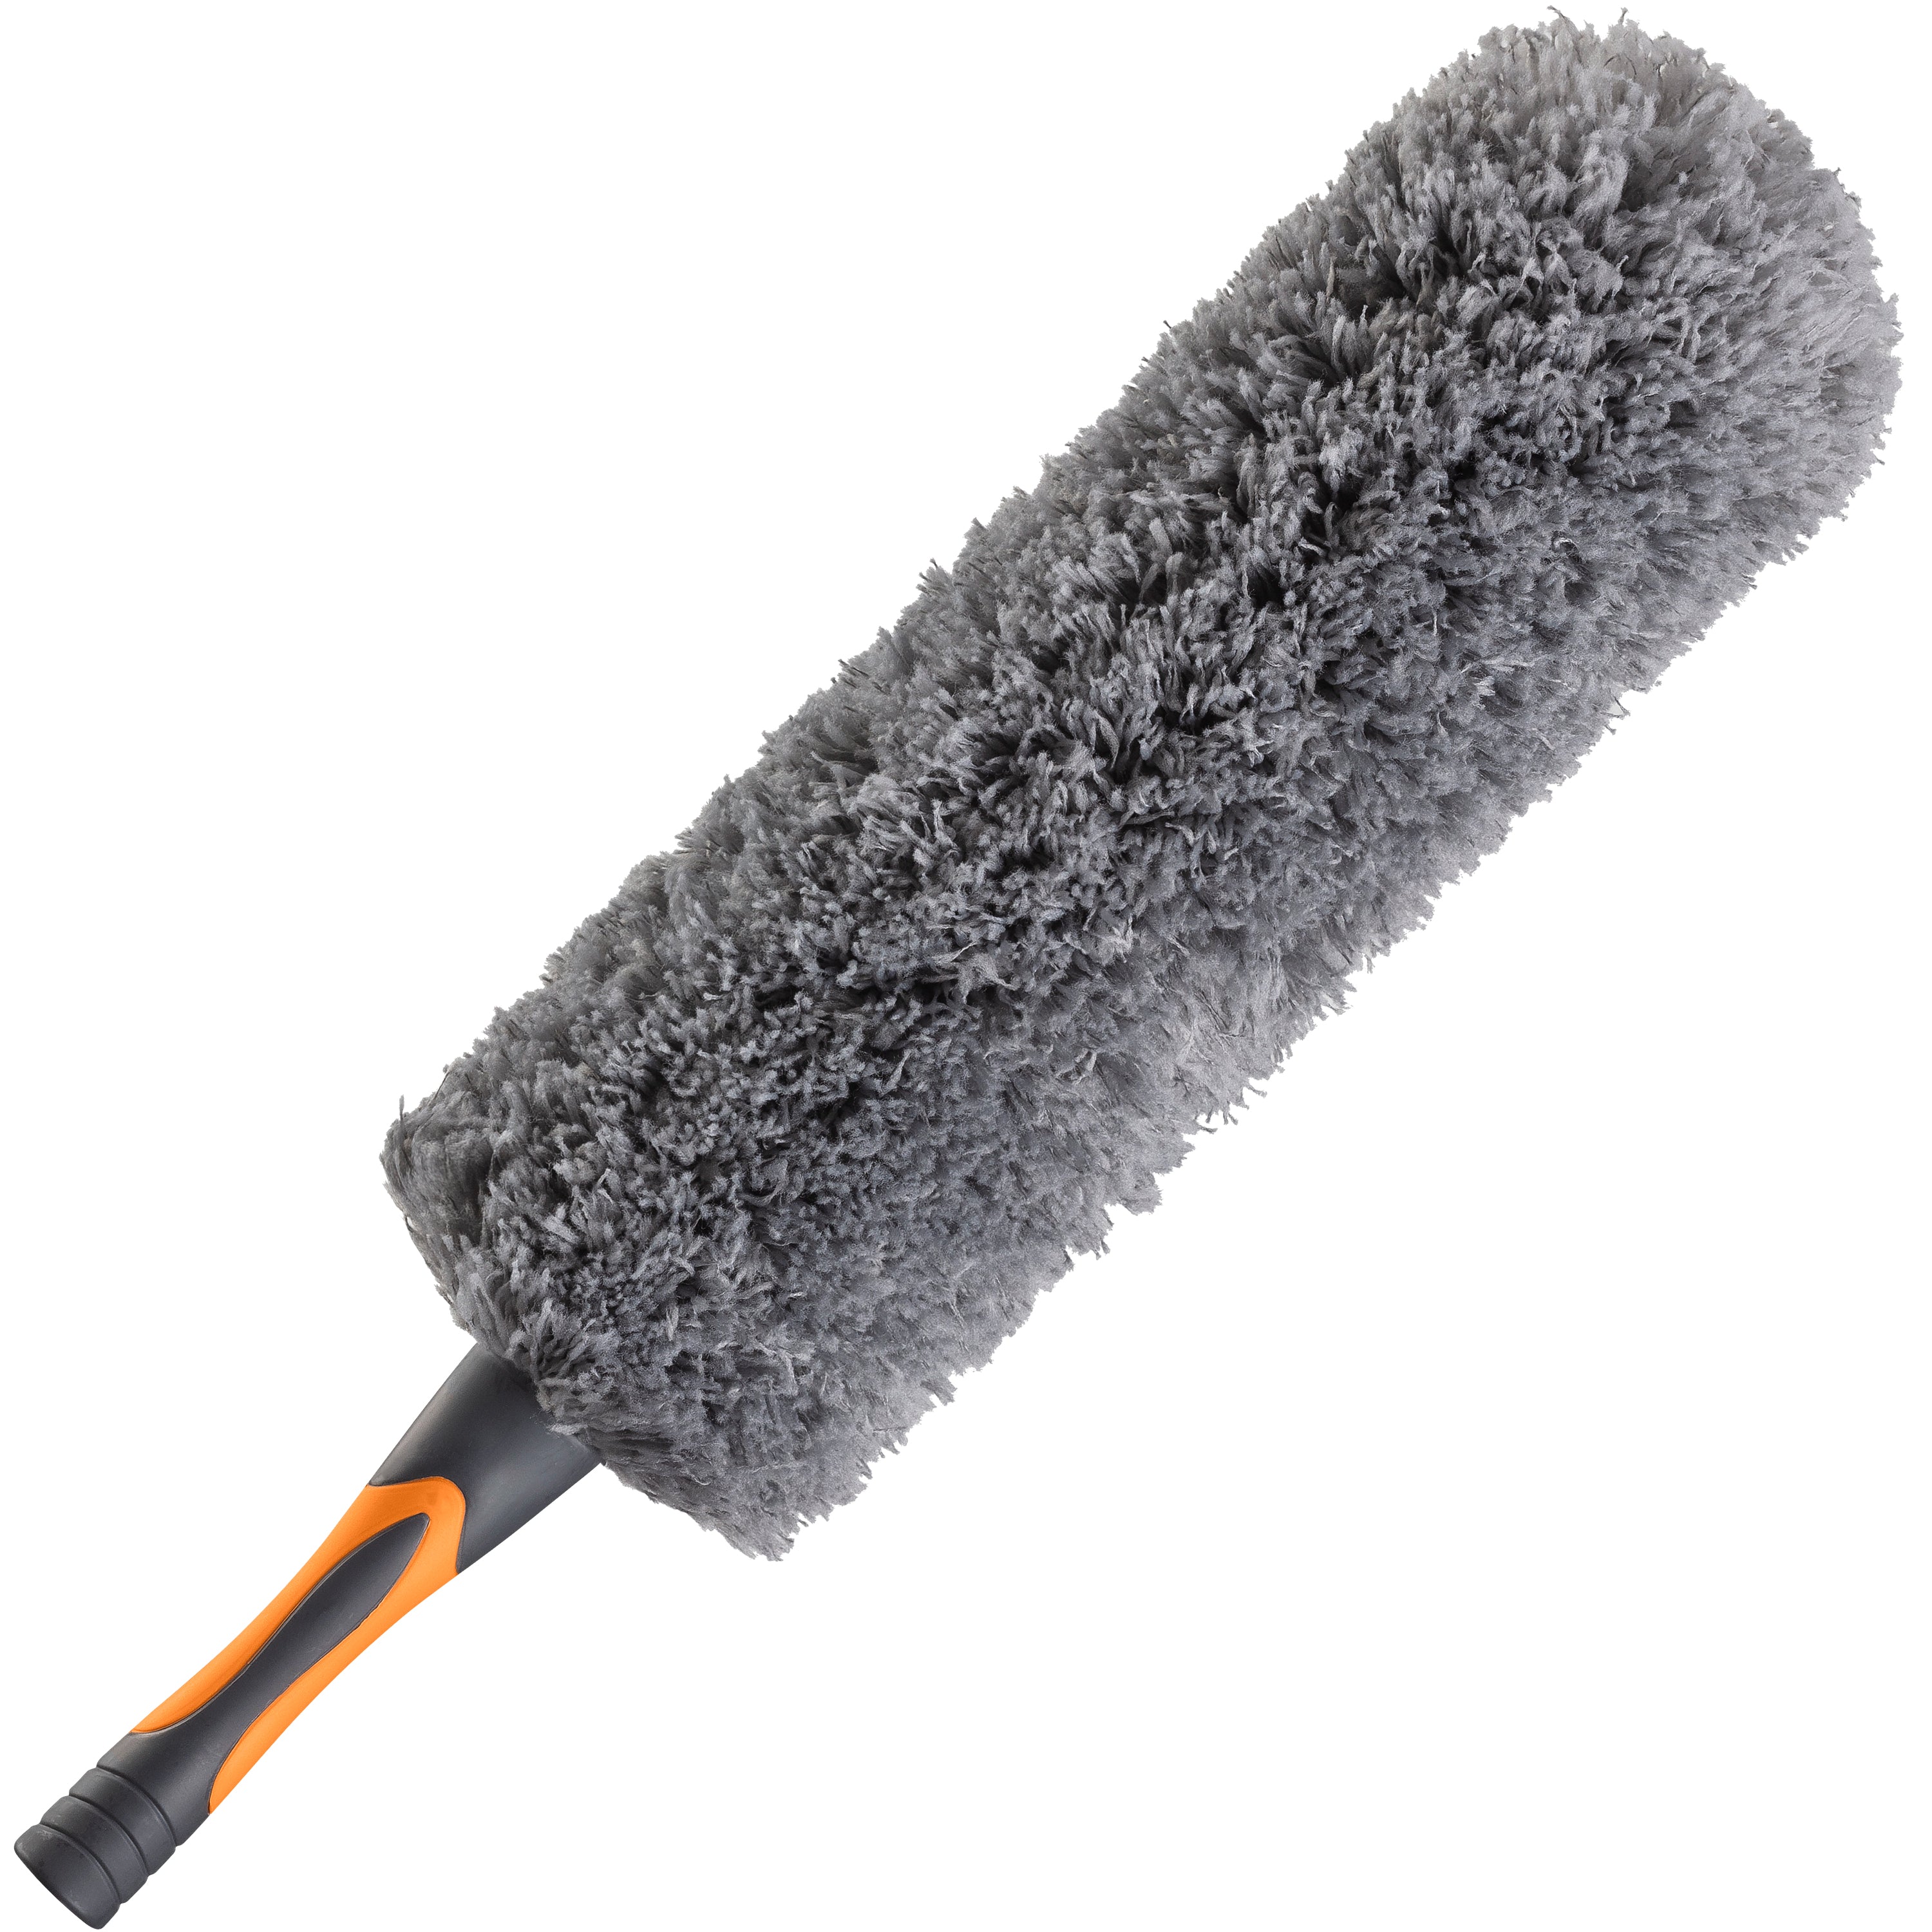 AllTopBargains 1 x Long Microfiber Duster Bendable Flexible Cleaning Brush Dust Cleaner Handle, Blue